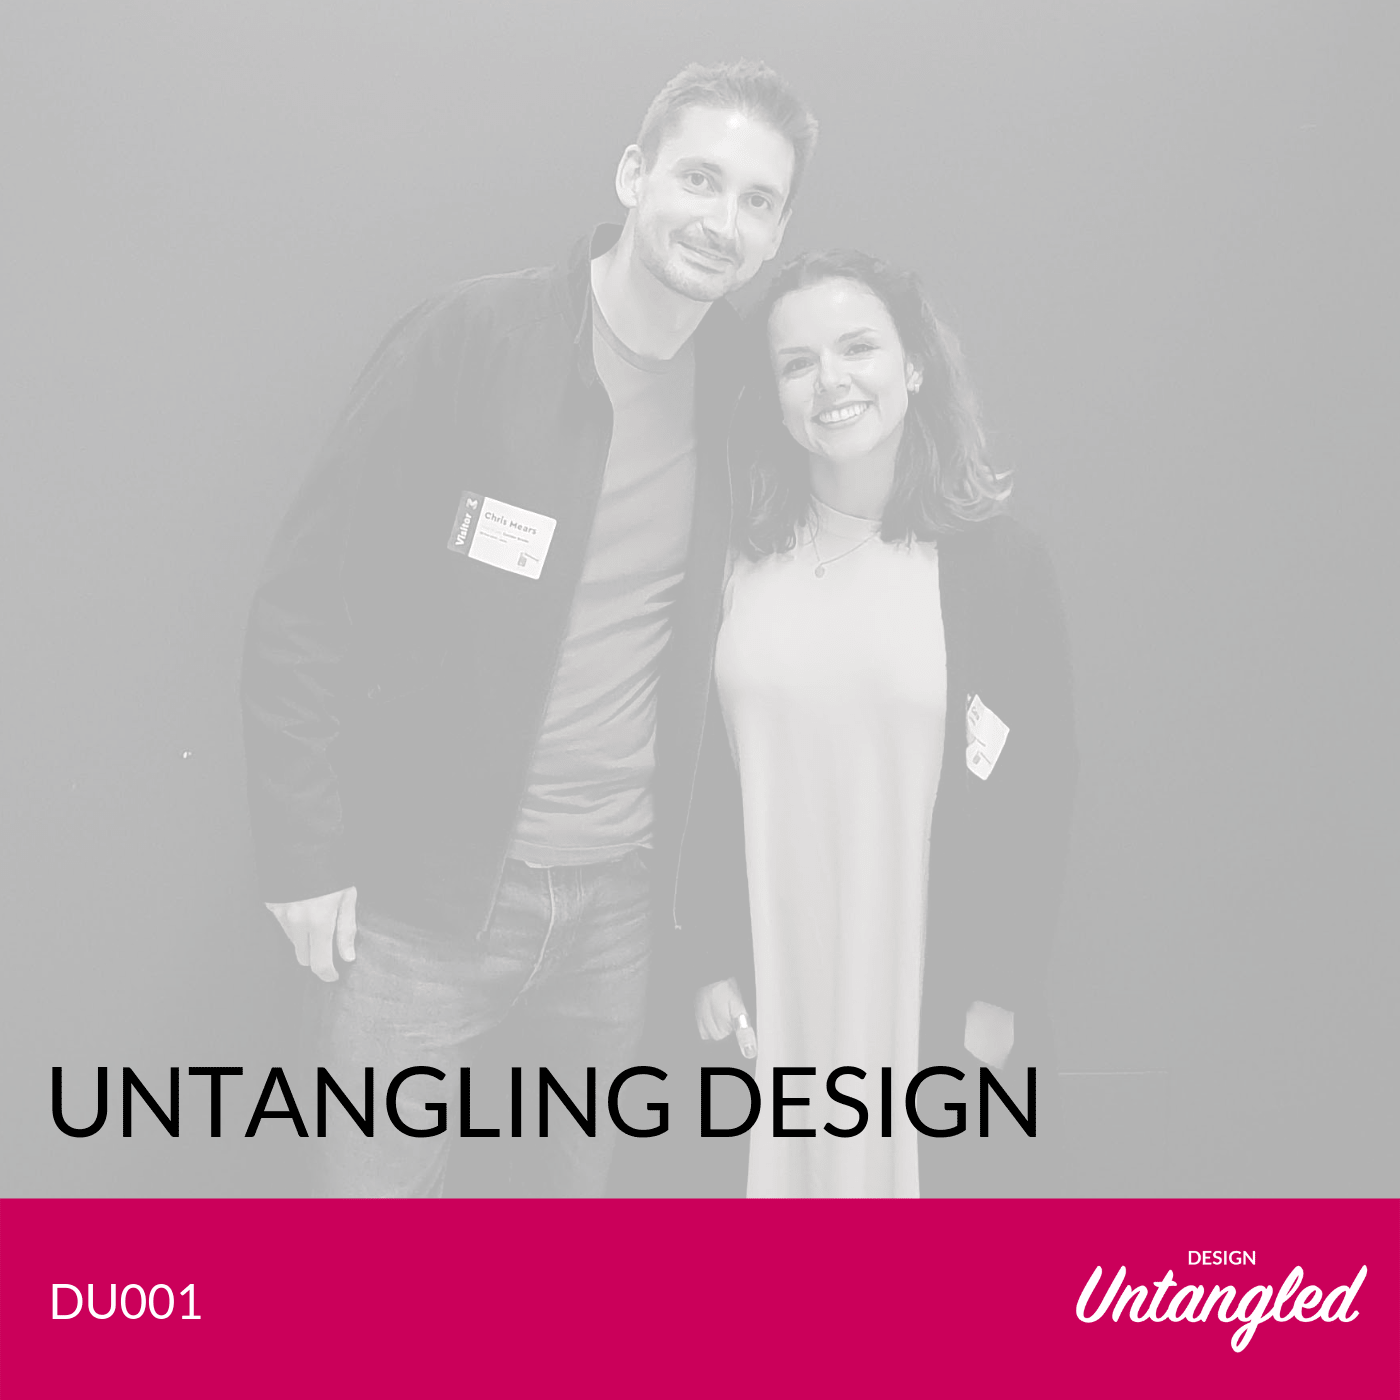 DU001 – Untangling Design